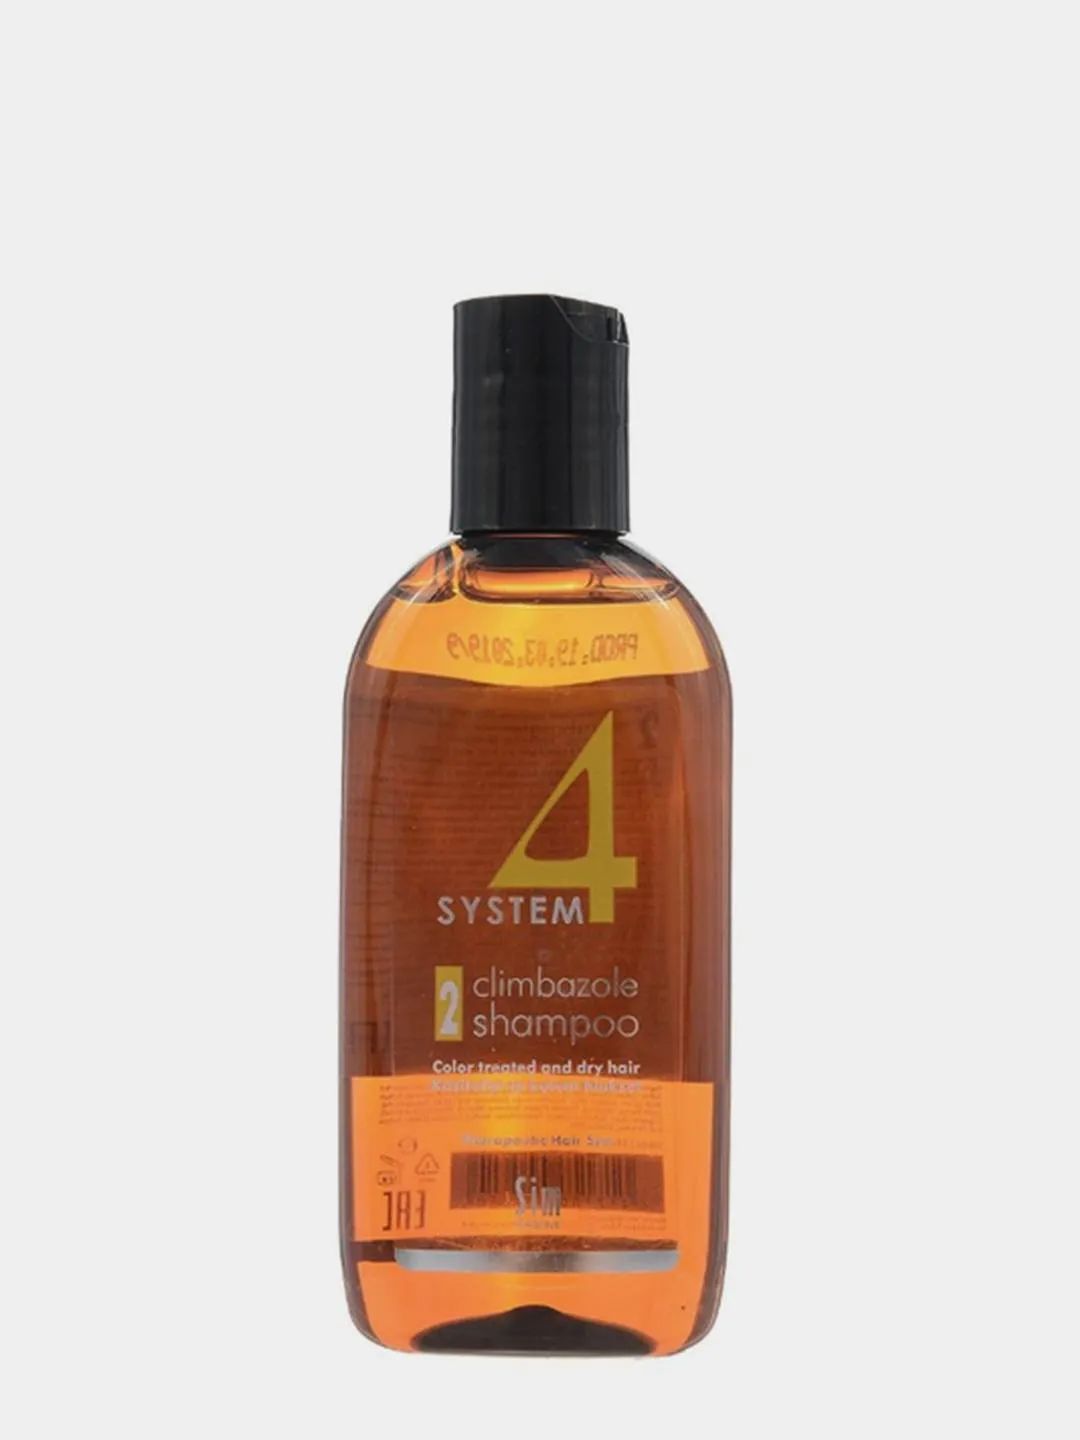 System4 Climbazole Shampoo 2. Шампунь SIM sensitive System 4. SIM sensitive шампунь system4 1 Climbazole Shampoo. Шампунь Climbazole Shampoo 2. System shampoo